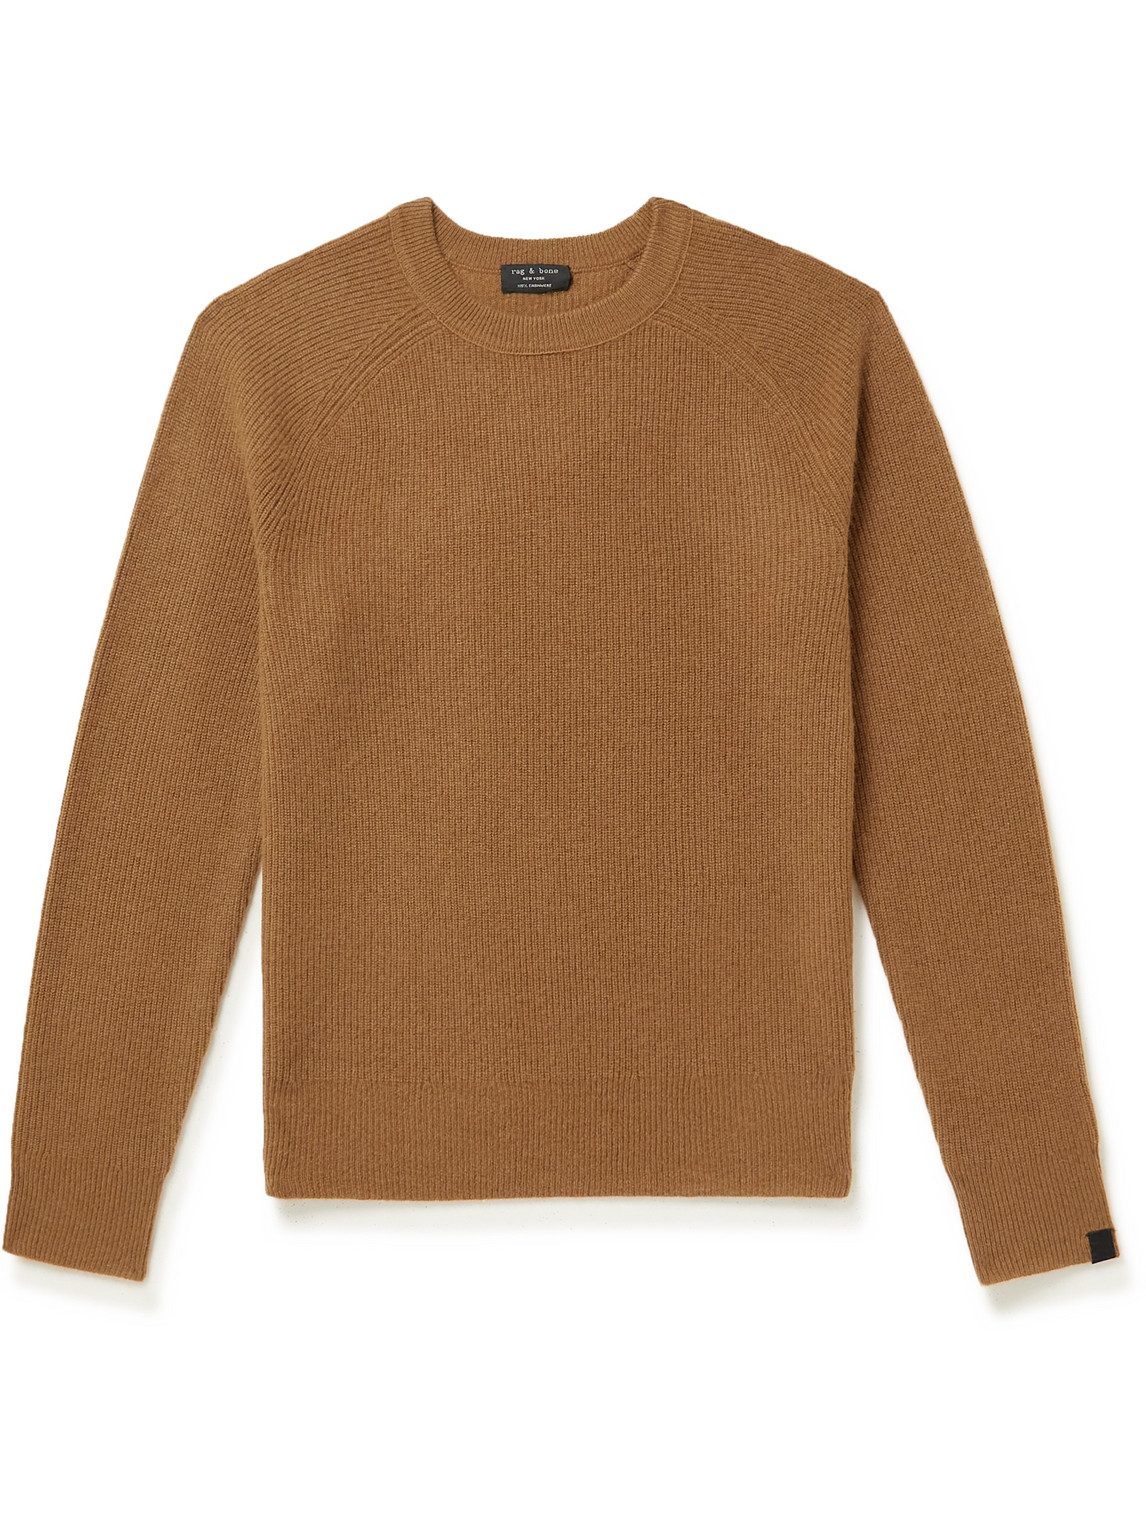 Rag & Bone Pierce Cashmere Sweater In Brown